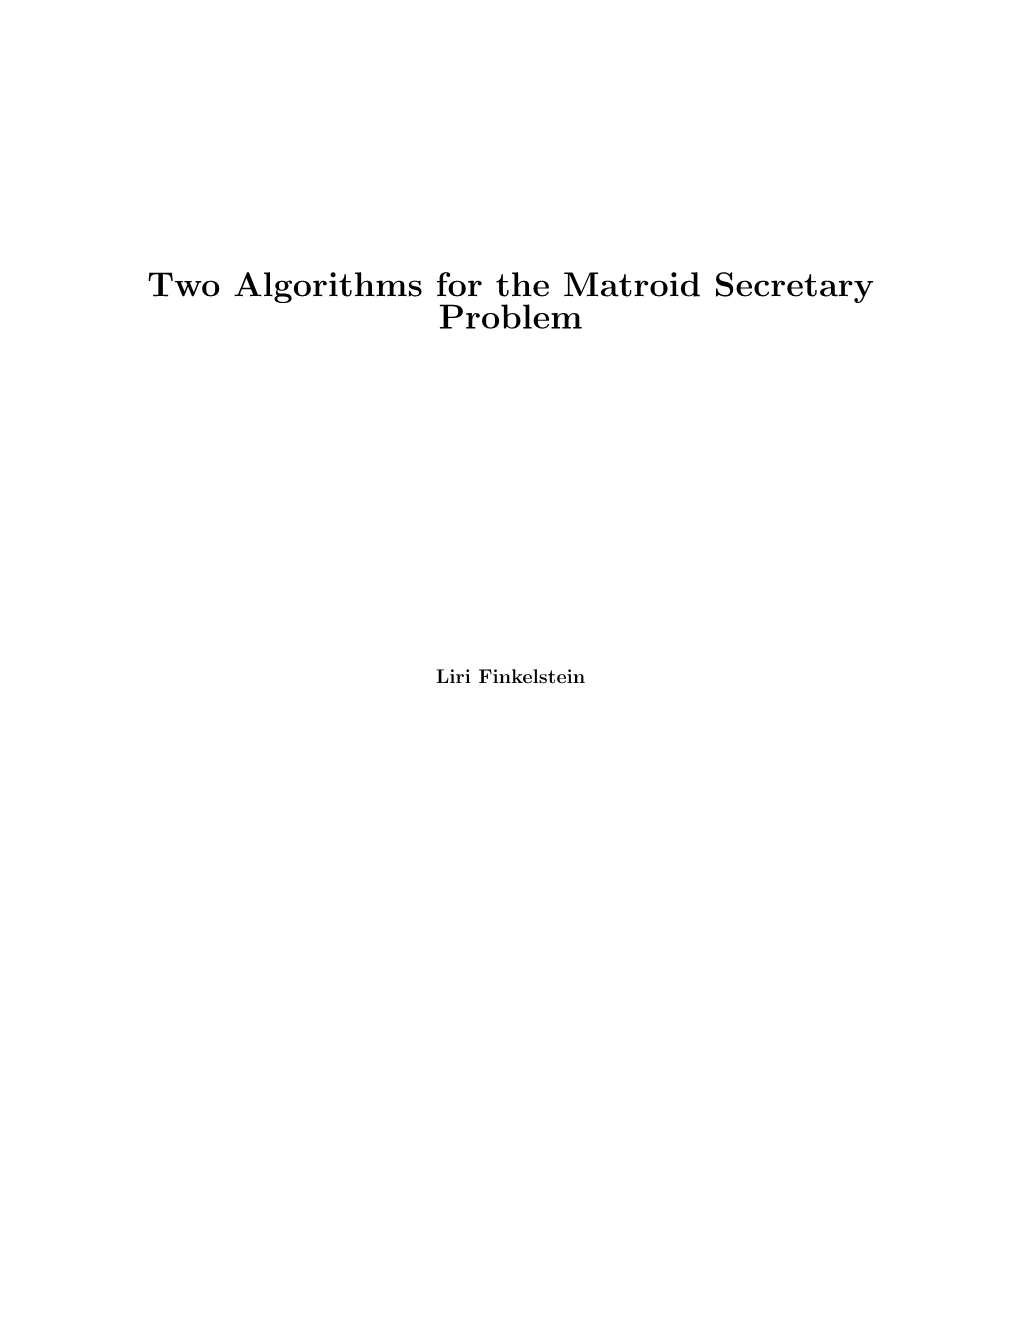 Two Algorithms for the Matroid Secretary Problem